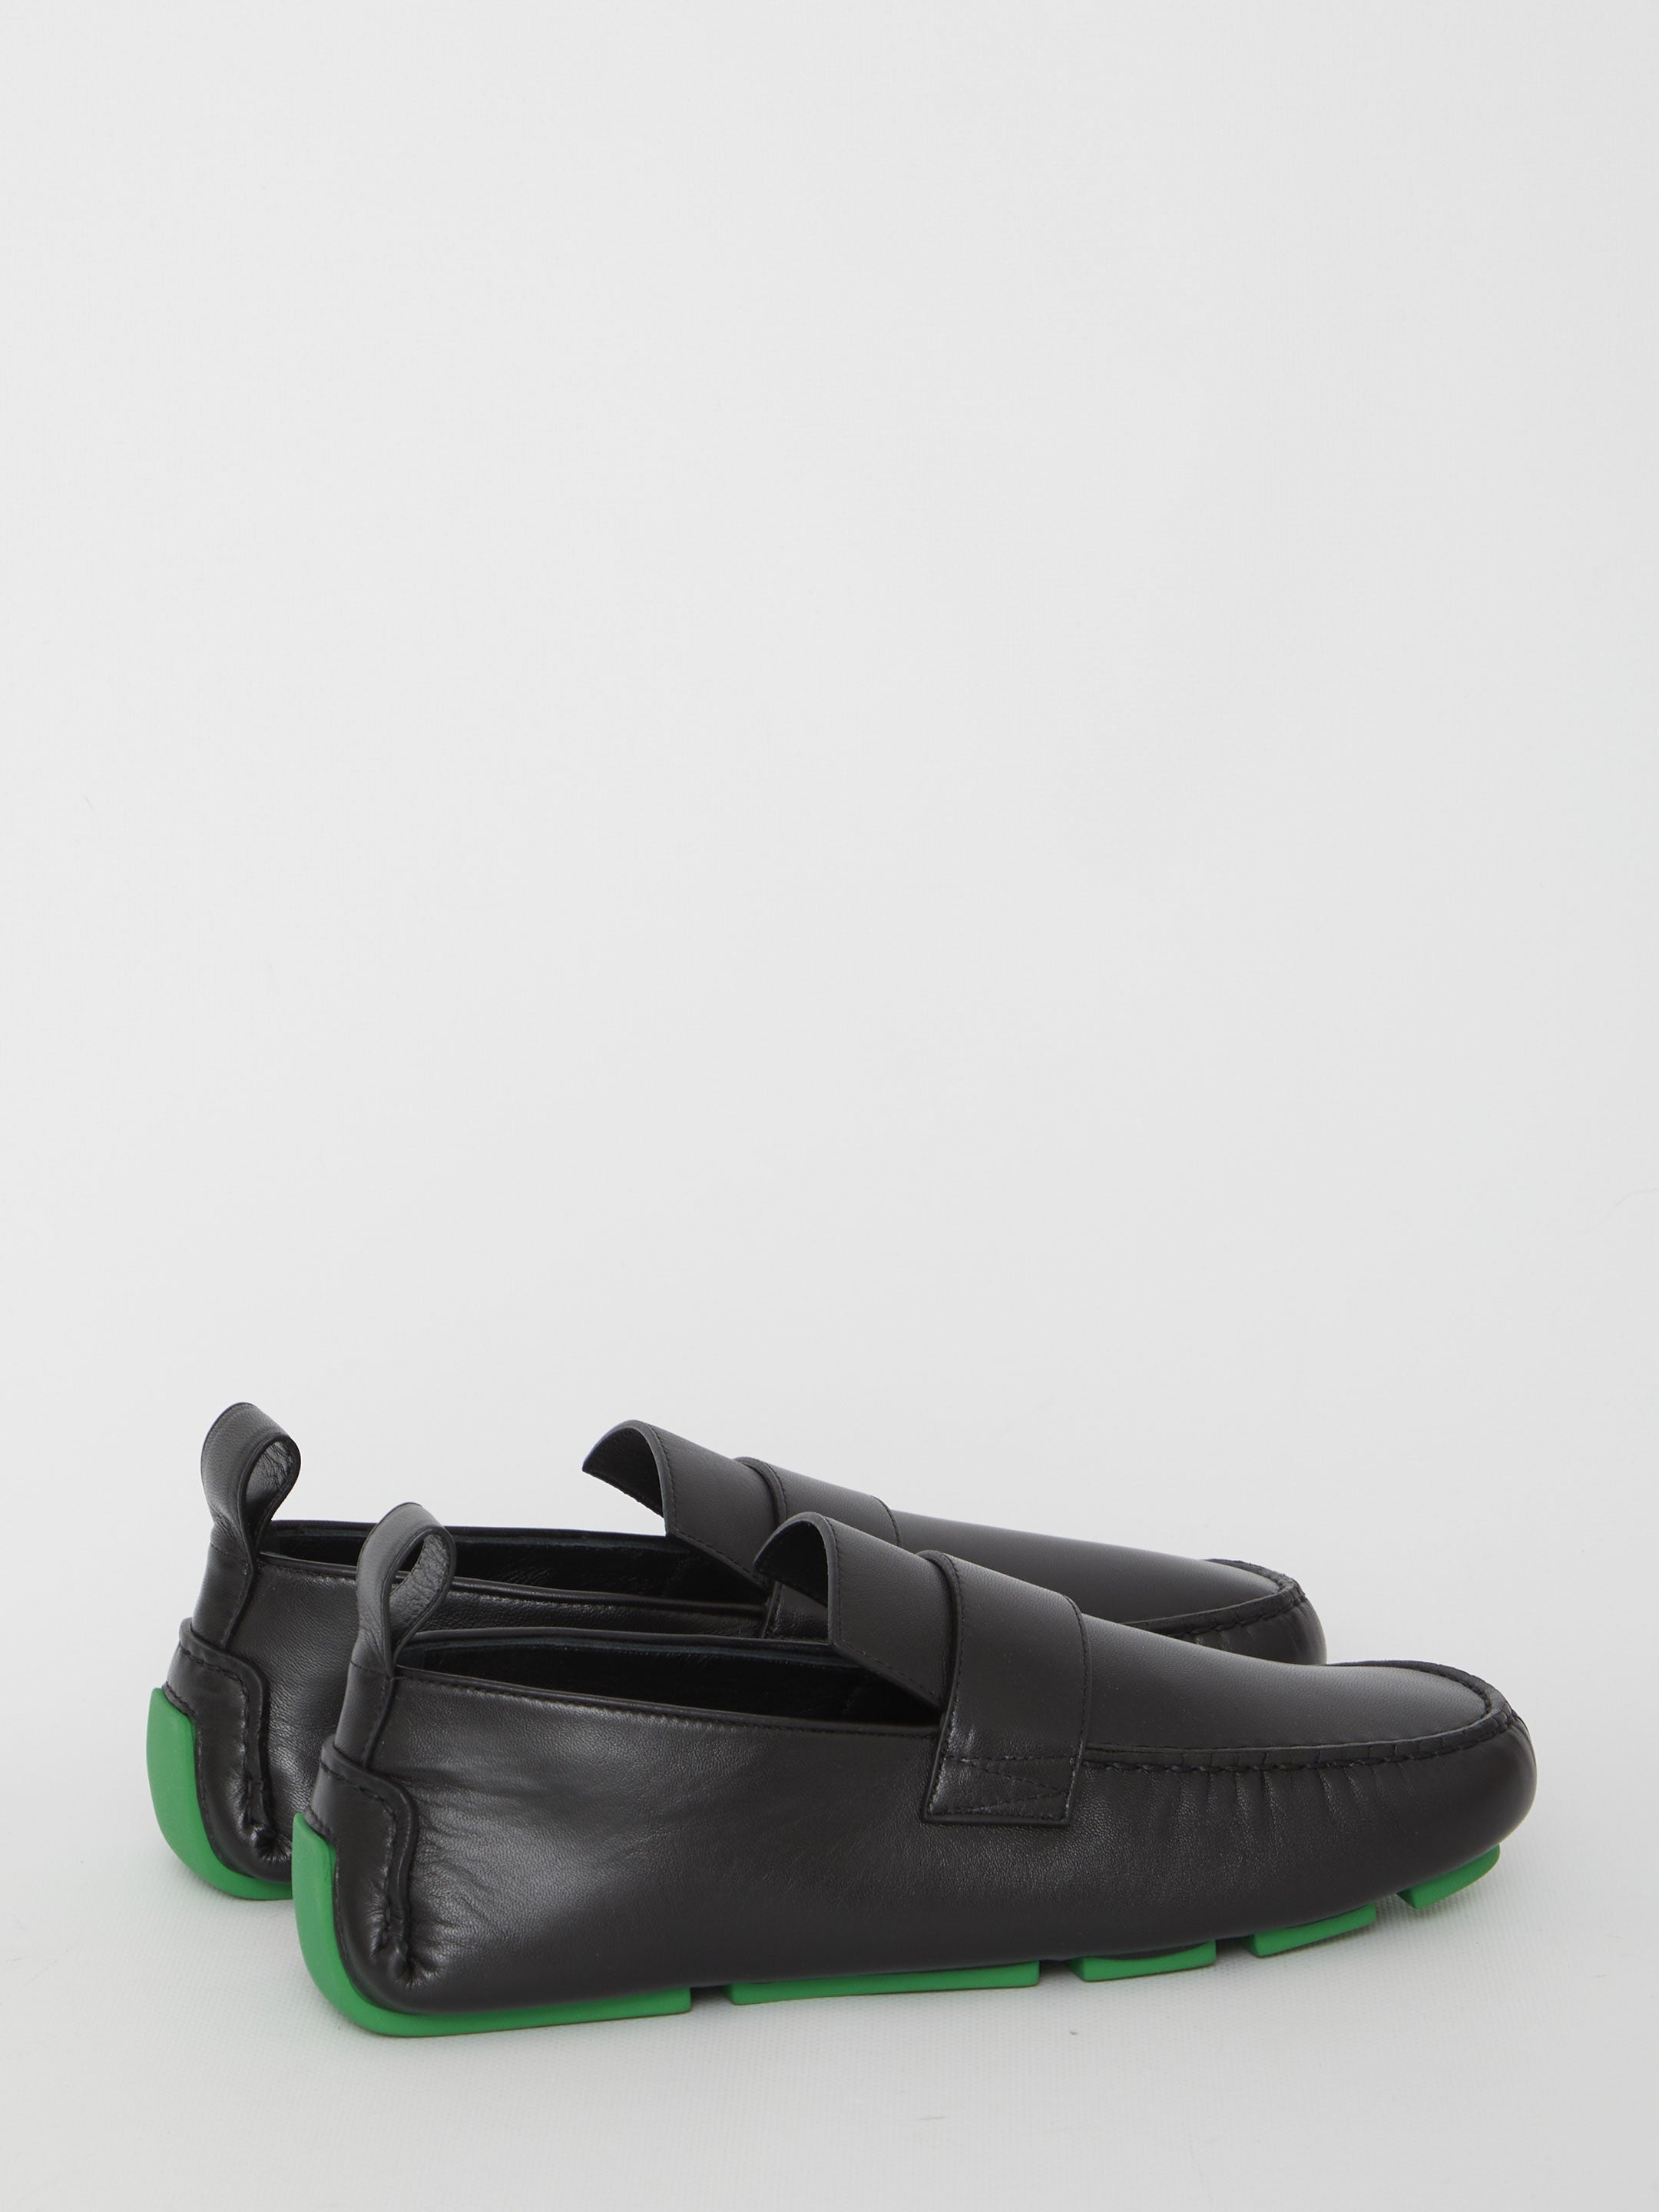 BOTTEGA-VENETA-OUTLET-SALE-Leather-loafers-Flache-Schuhe-41-BLACK-ARCHIVE-COLLECTION-3.jpg